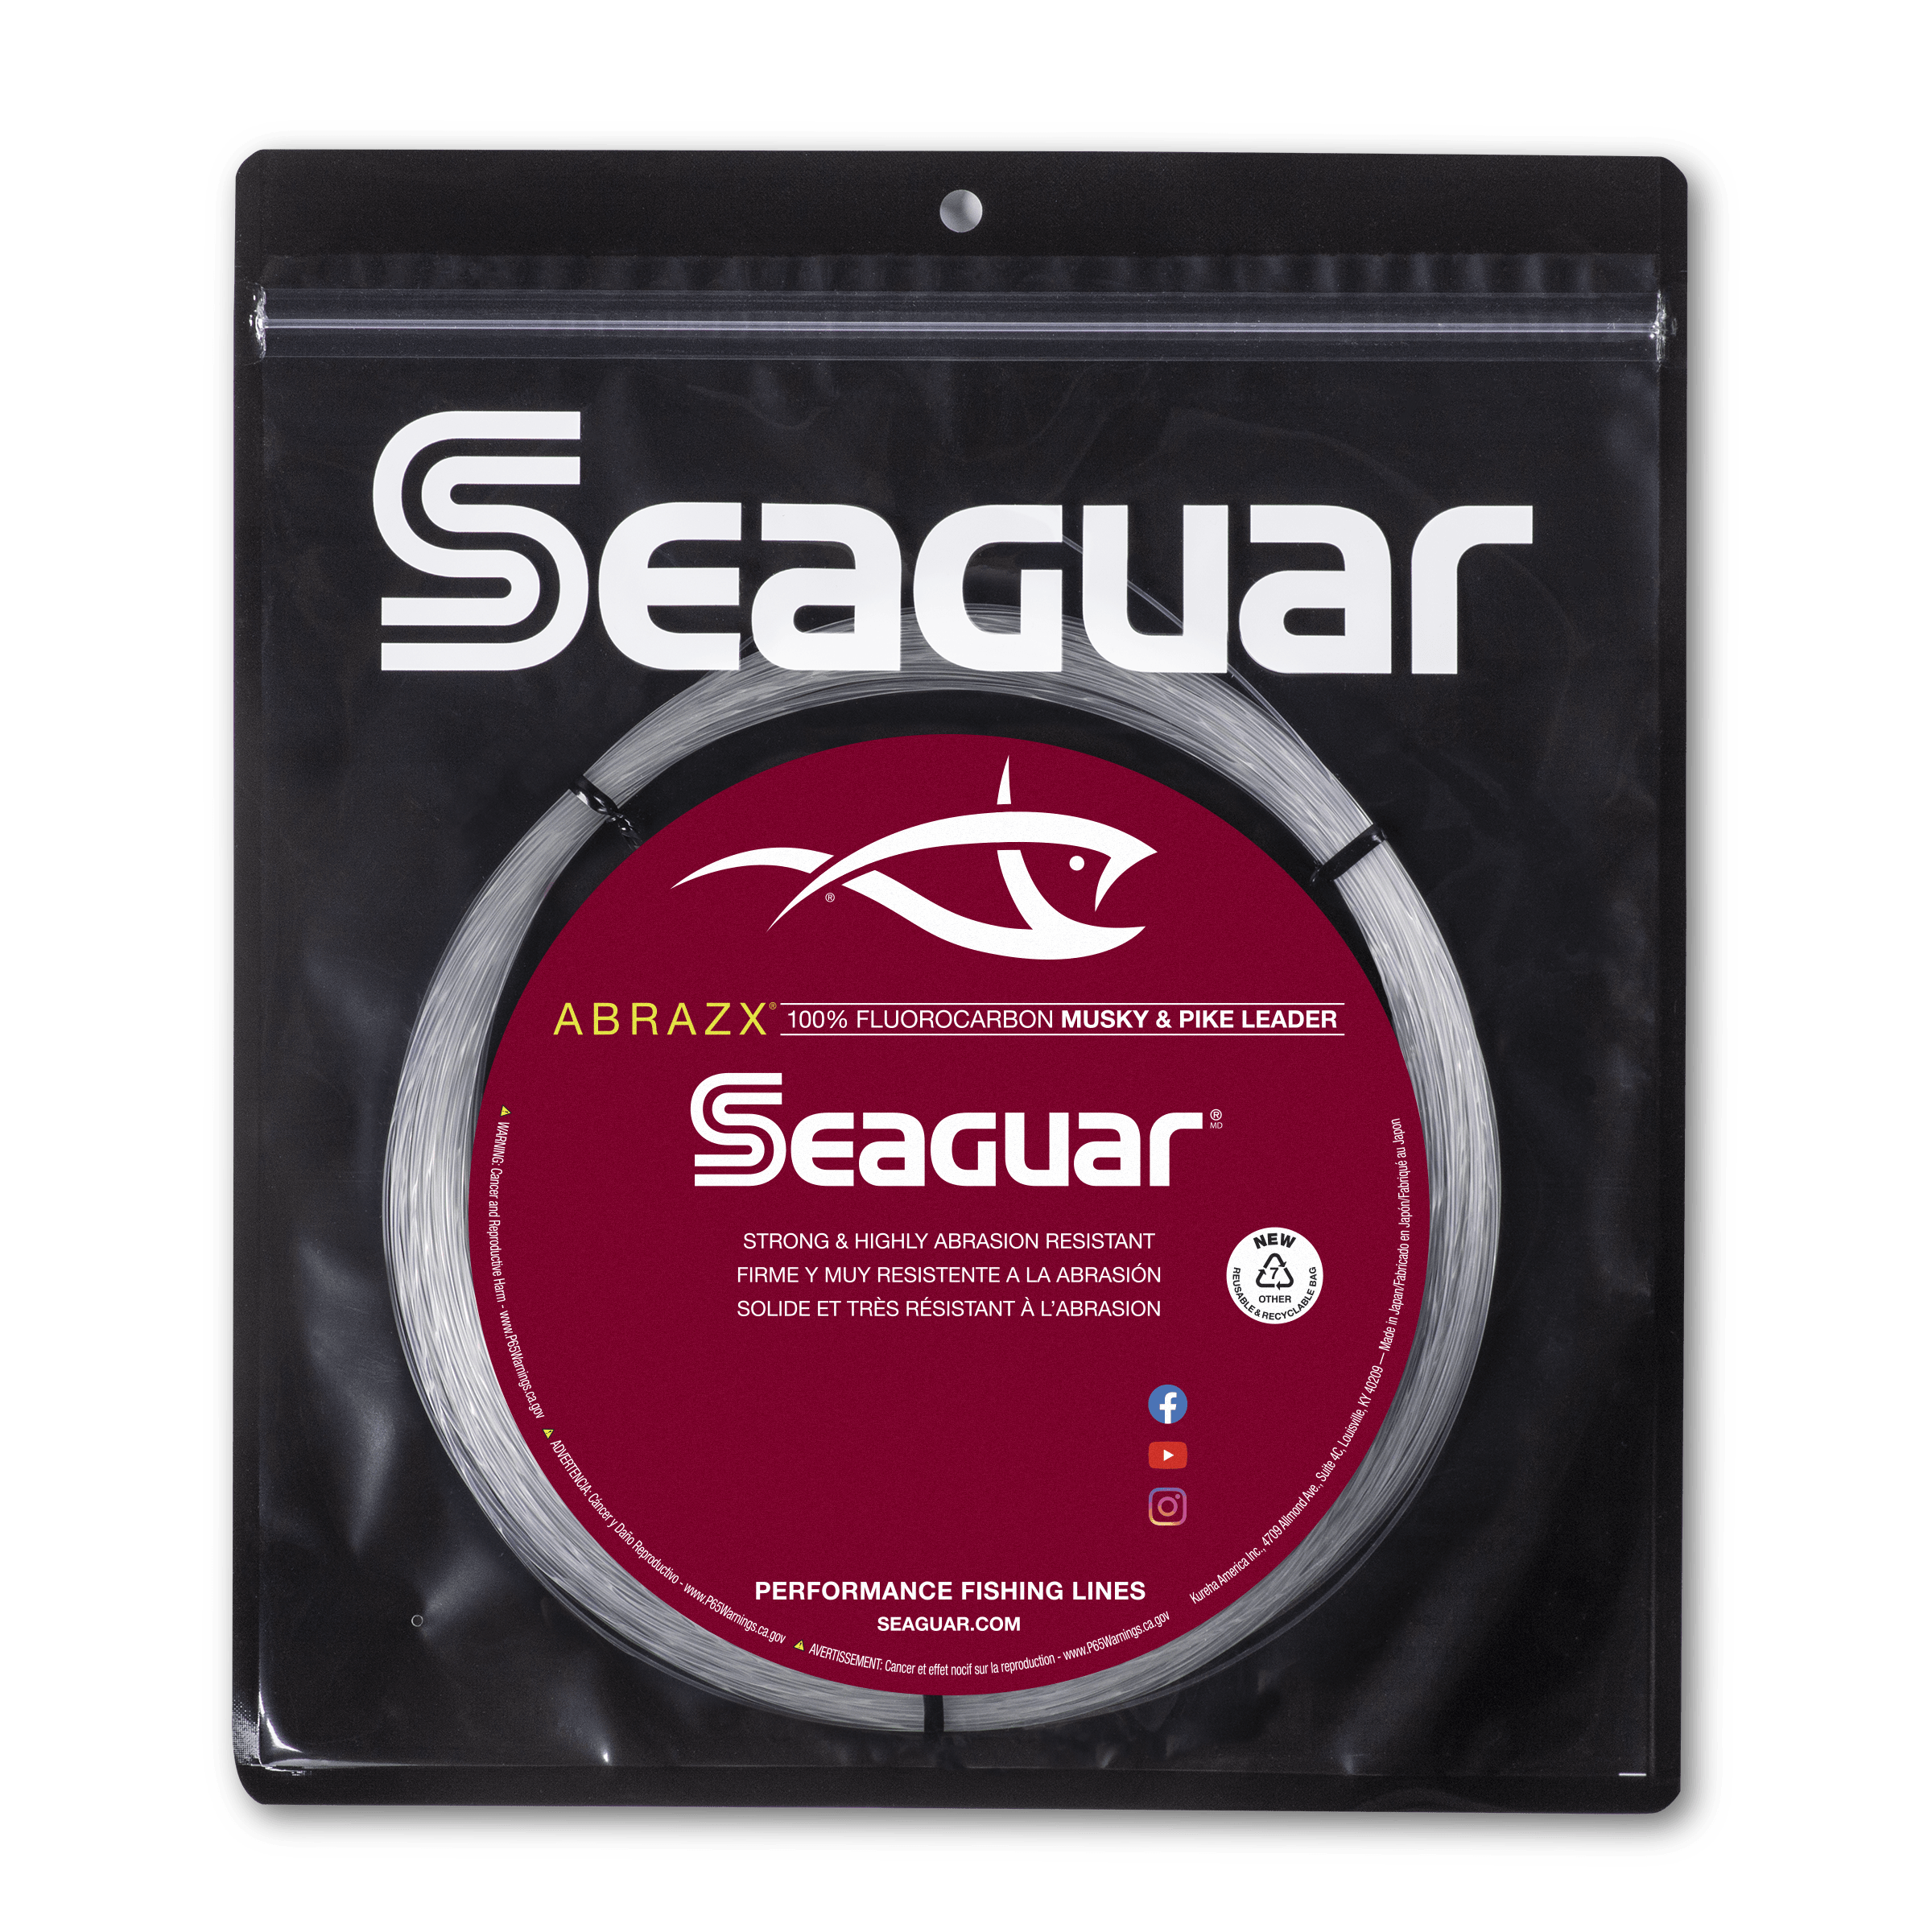 Seaguar Premier Fluorocarbon Line - TunaFishTackle